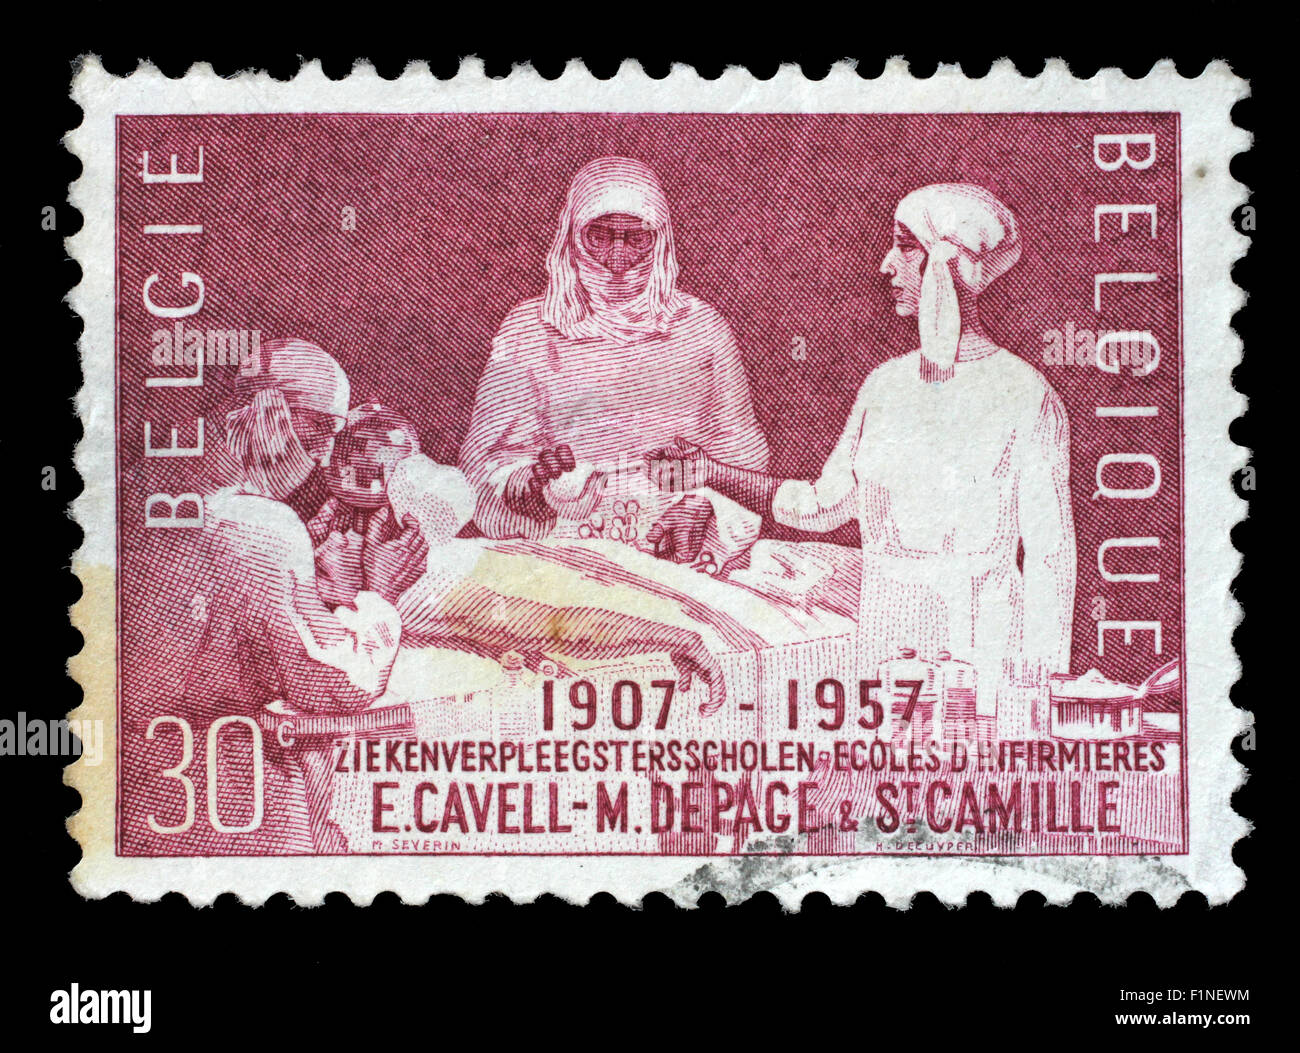 Stamp printed by Belgium shows Nursing school, circa 1957. Stock Photo